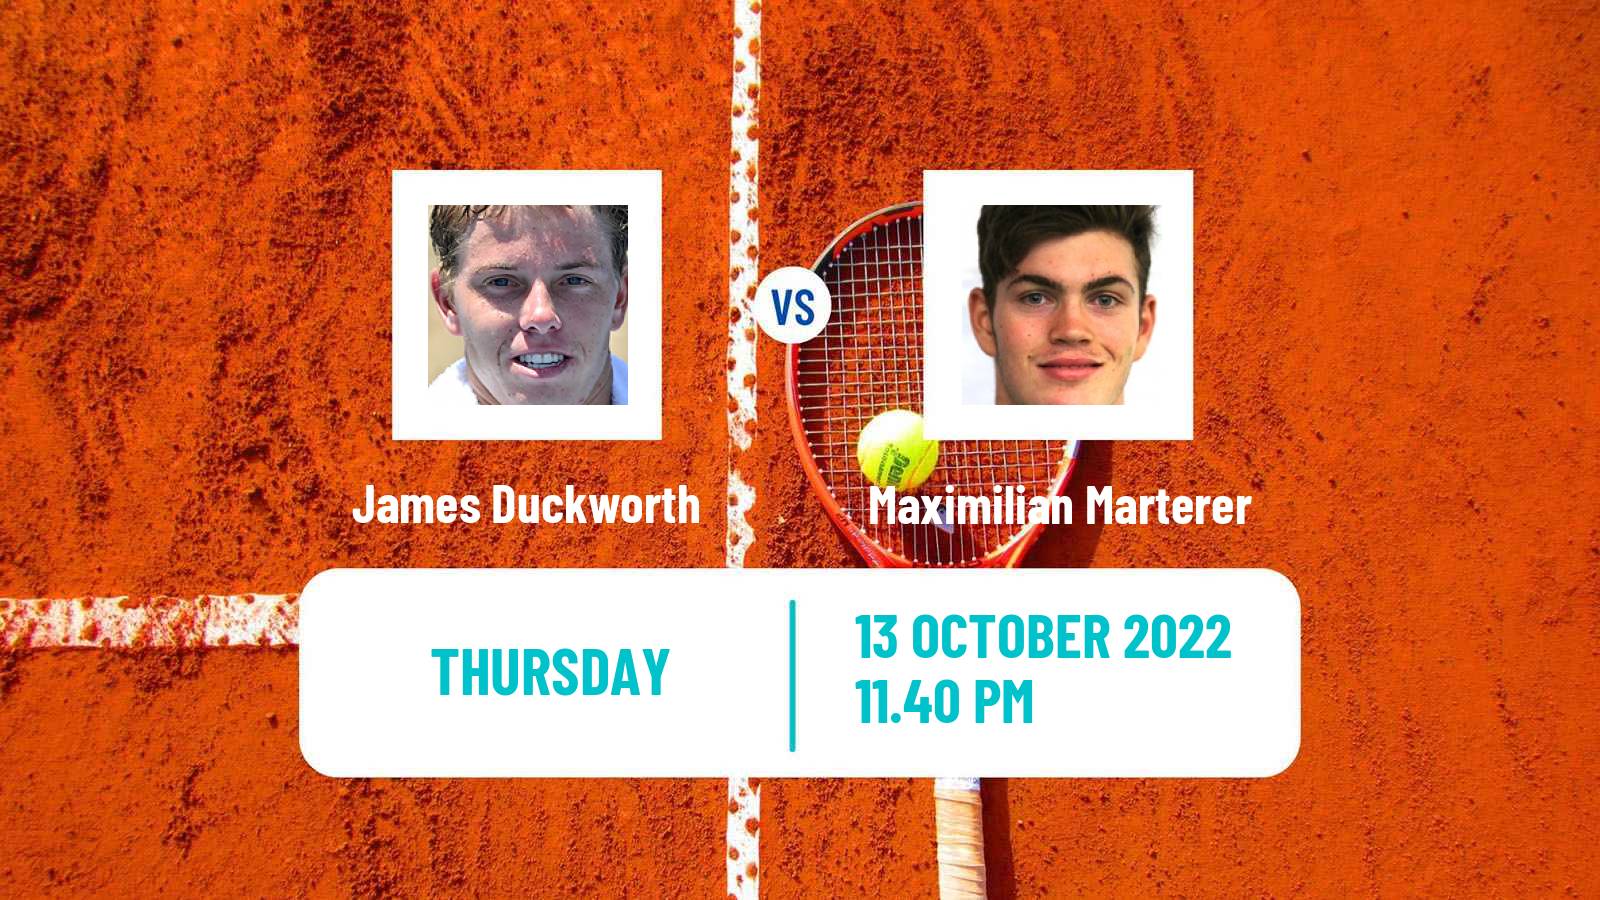 Tennis ATP Challenger James Duckworth - Maximilian Marterer